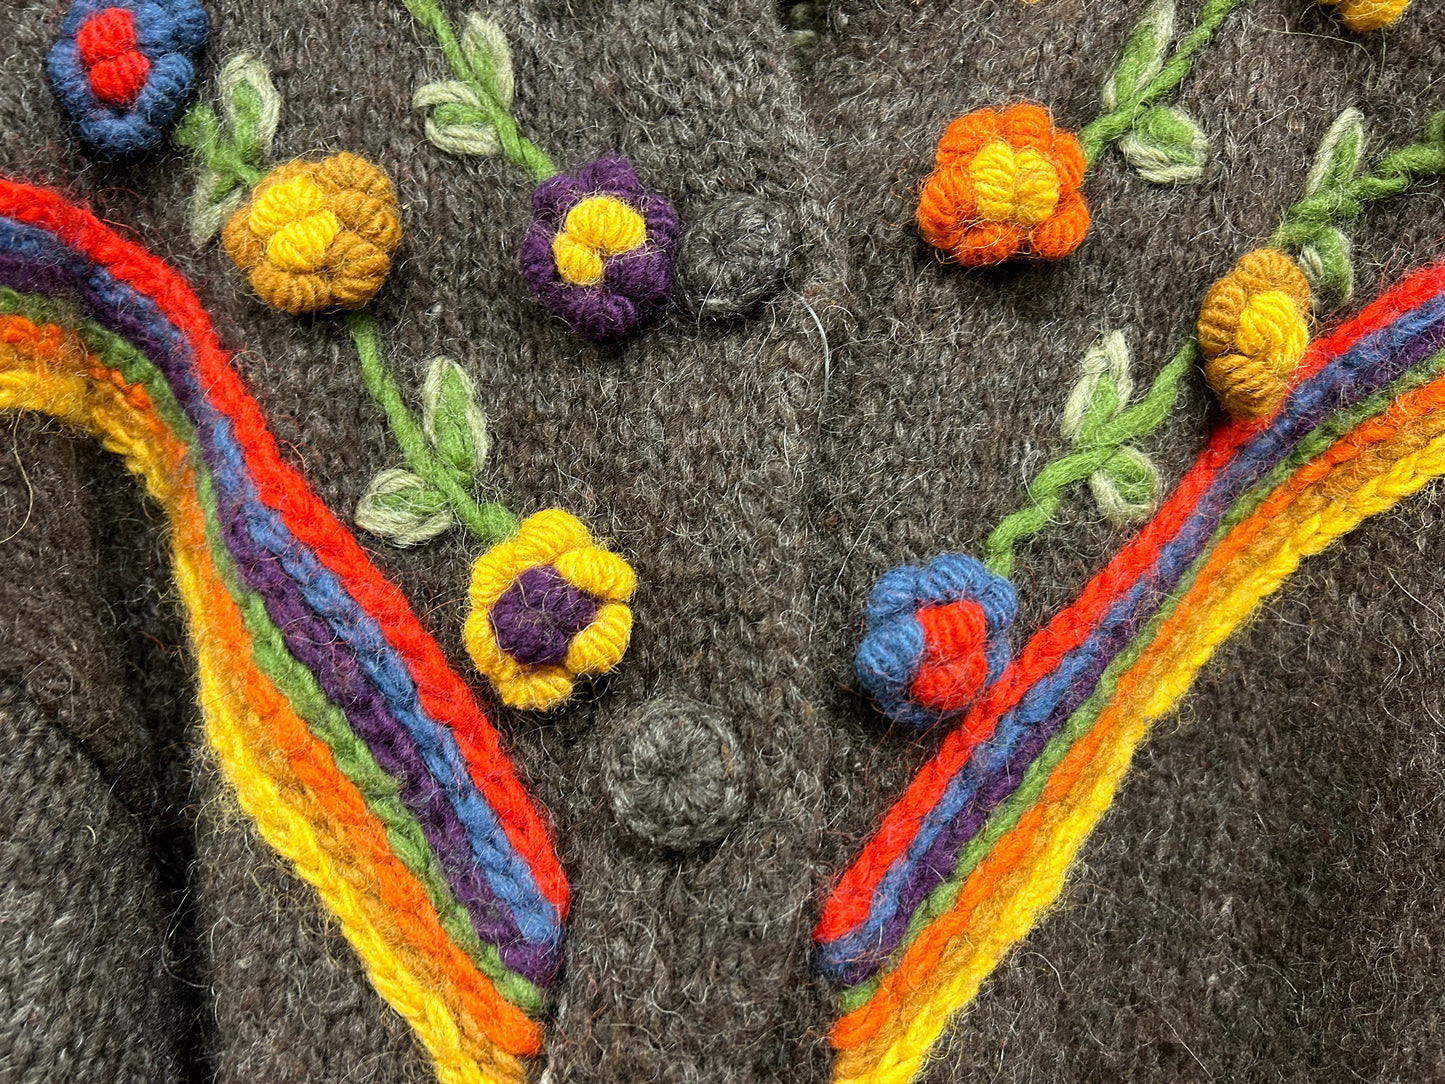 Vintage Knit Cardigan [A25957]